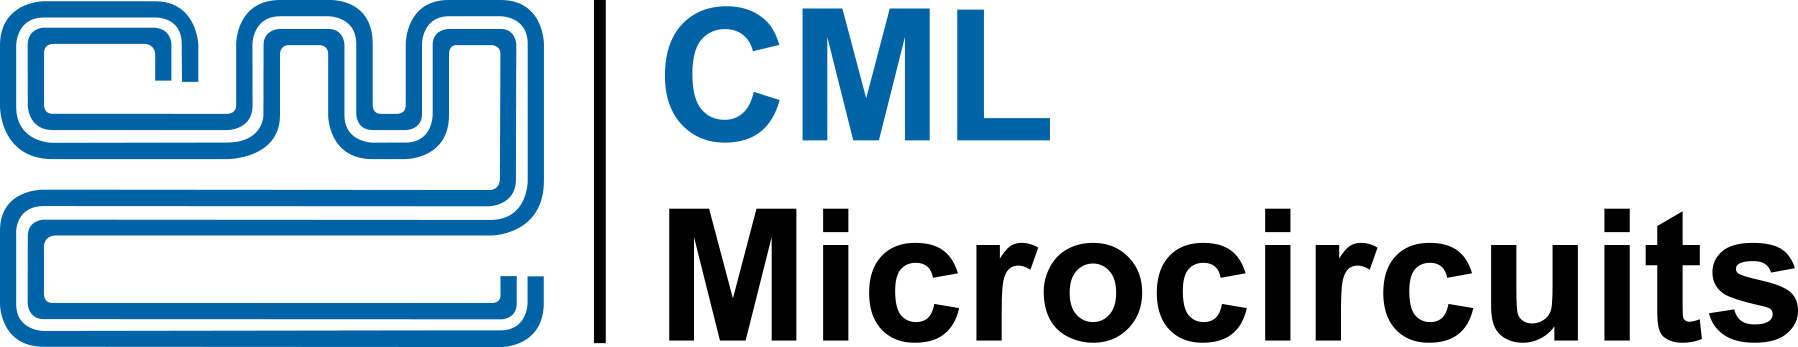 CML Microcircuits LOGO